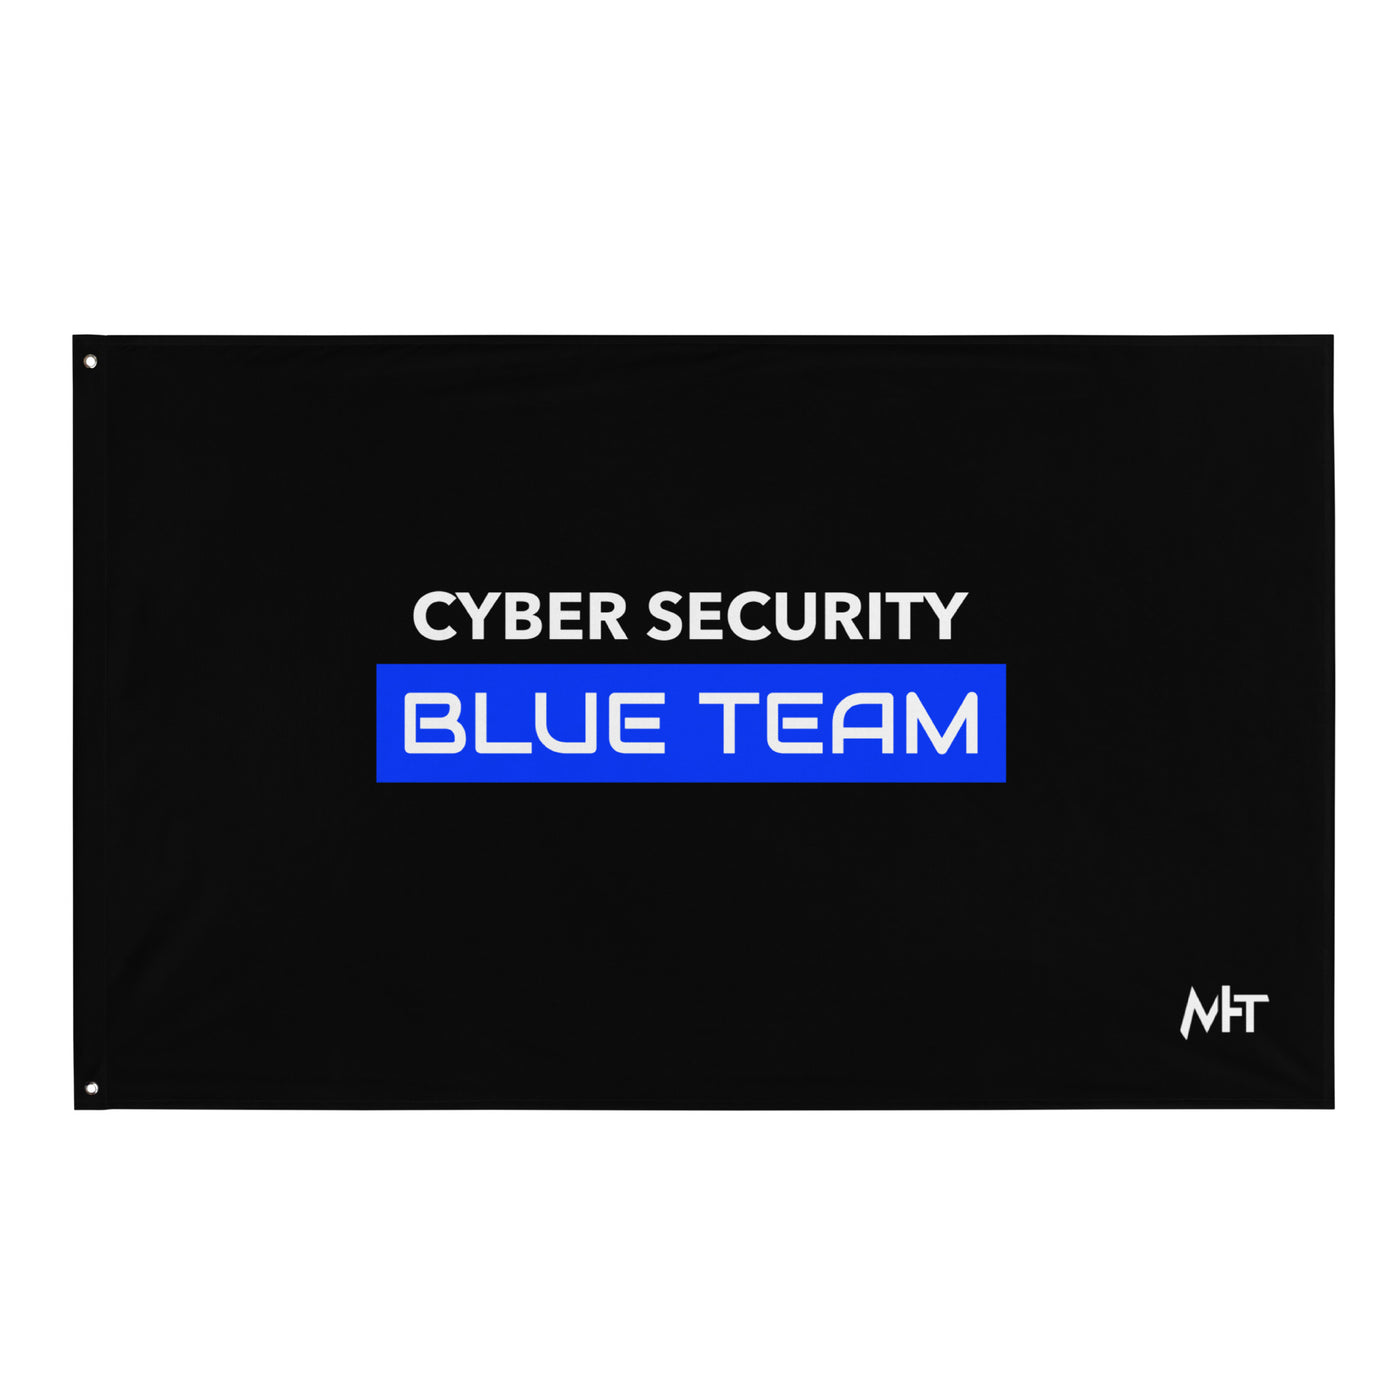 Cyber Security Blue Team V12 - Flag